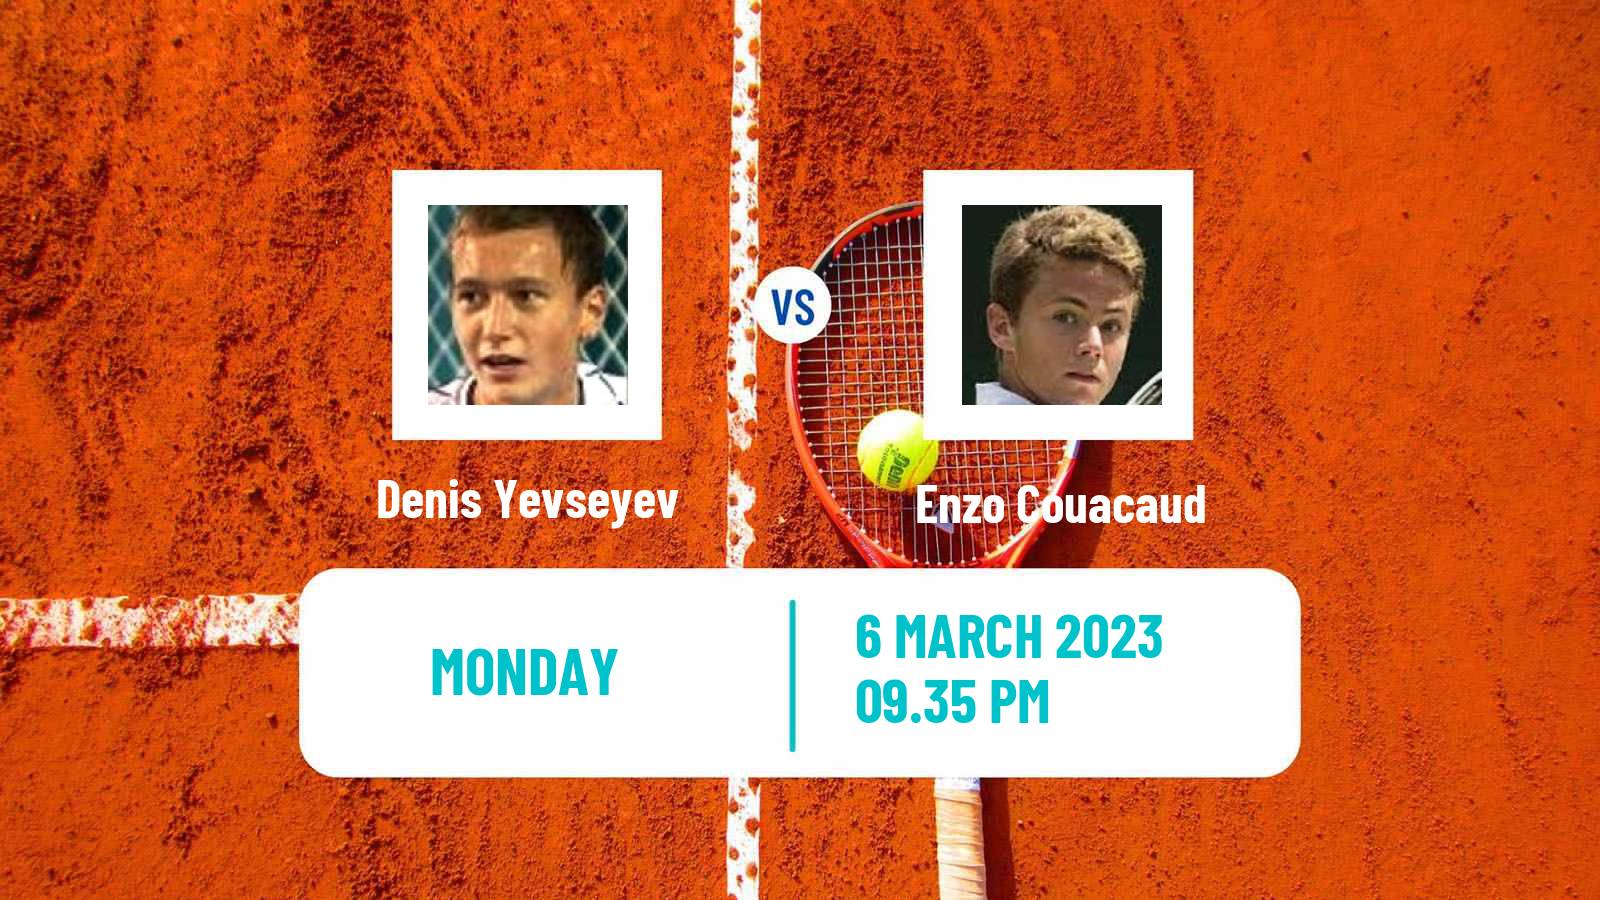 Tennis ATP Challenger Denis Yevseyev - Enzo Couacaud